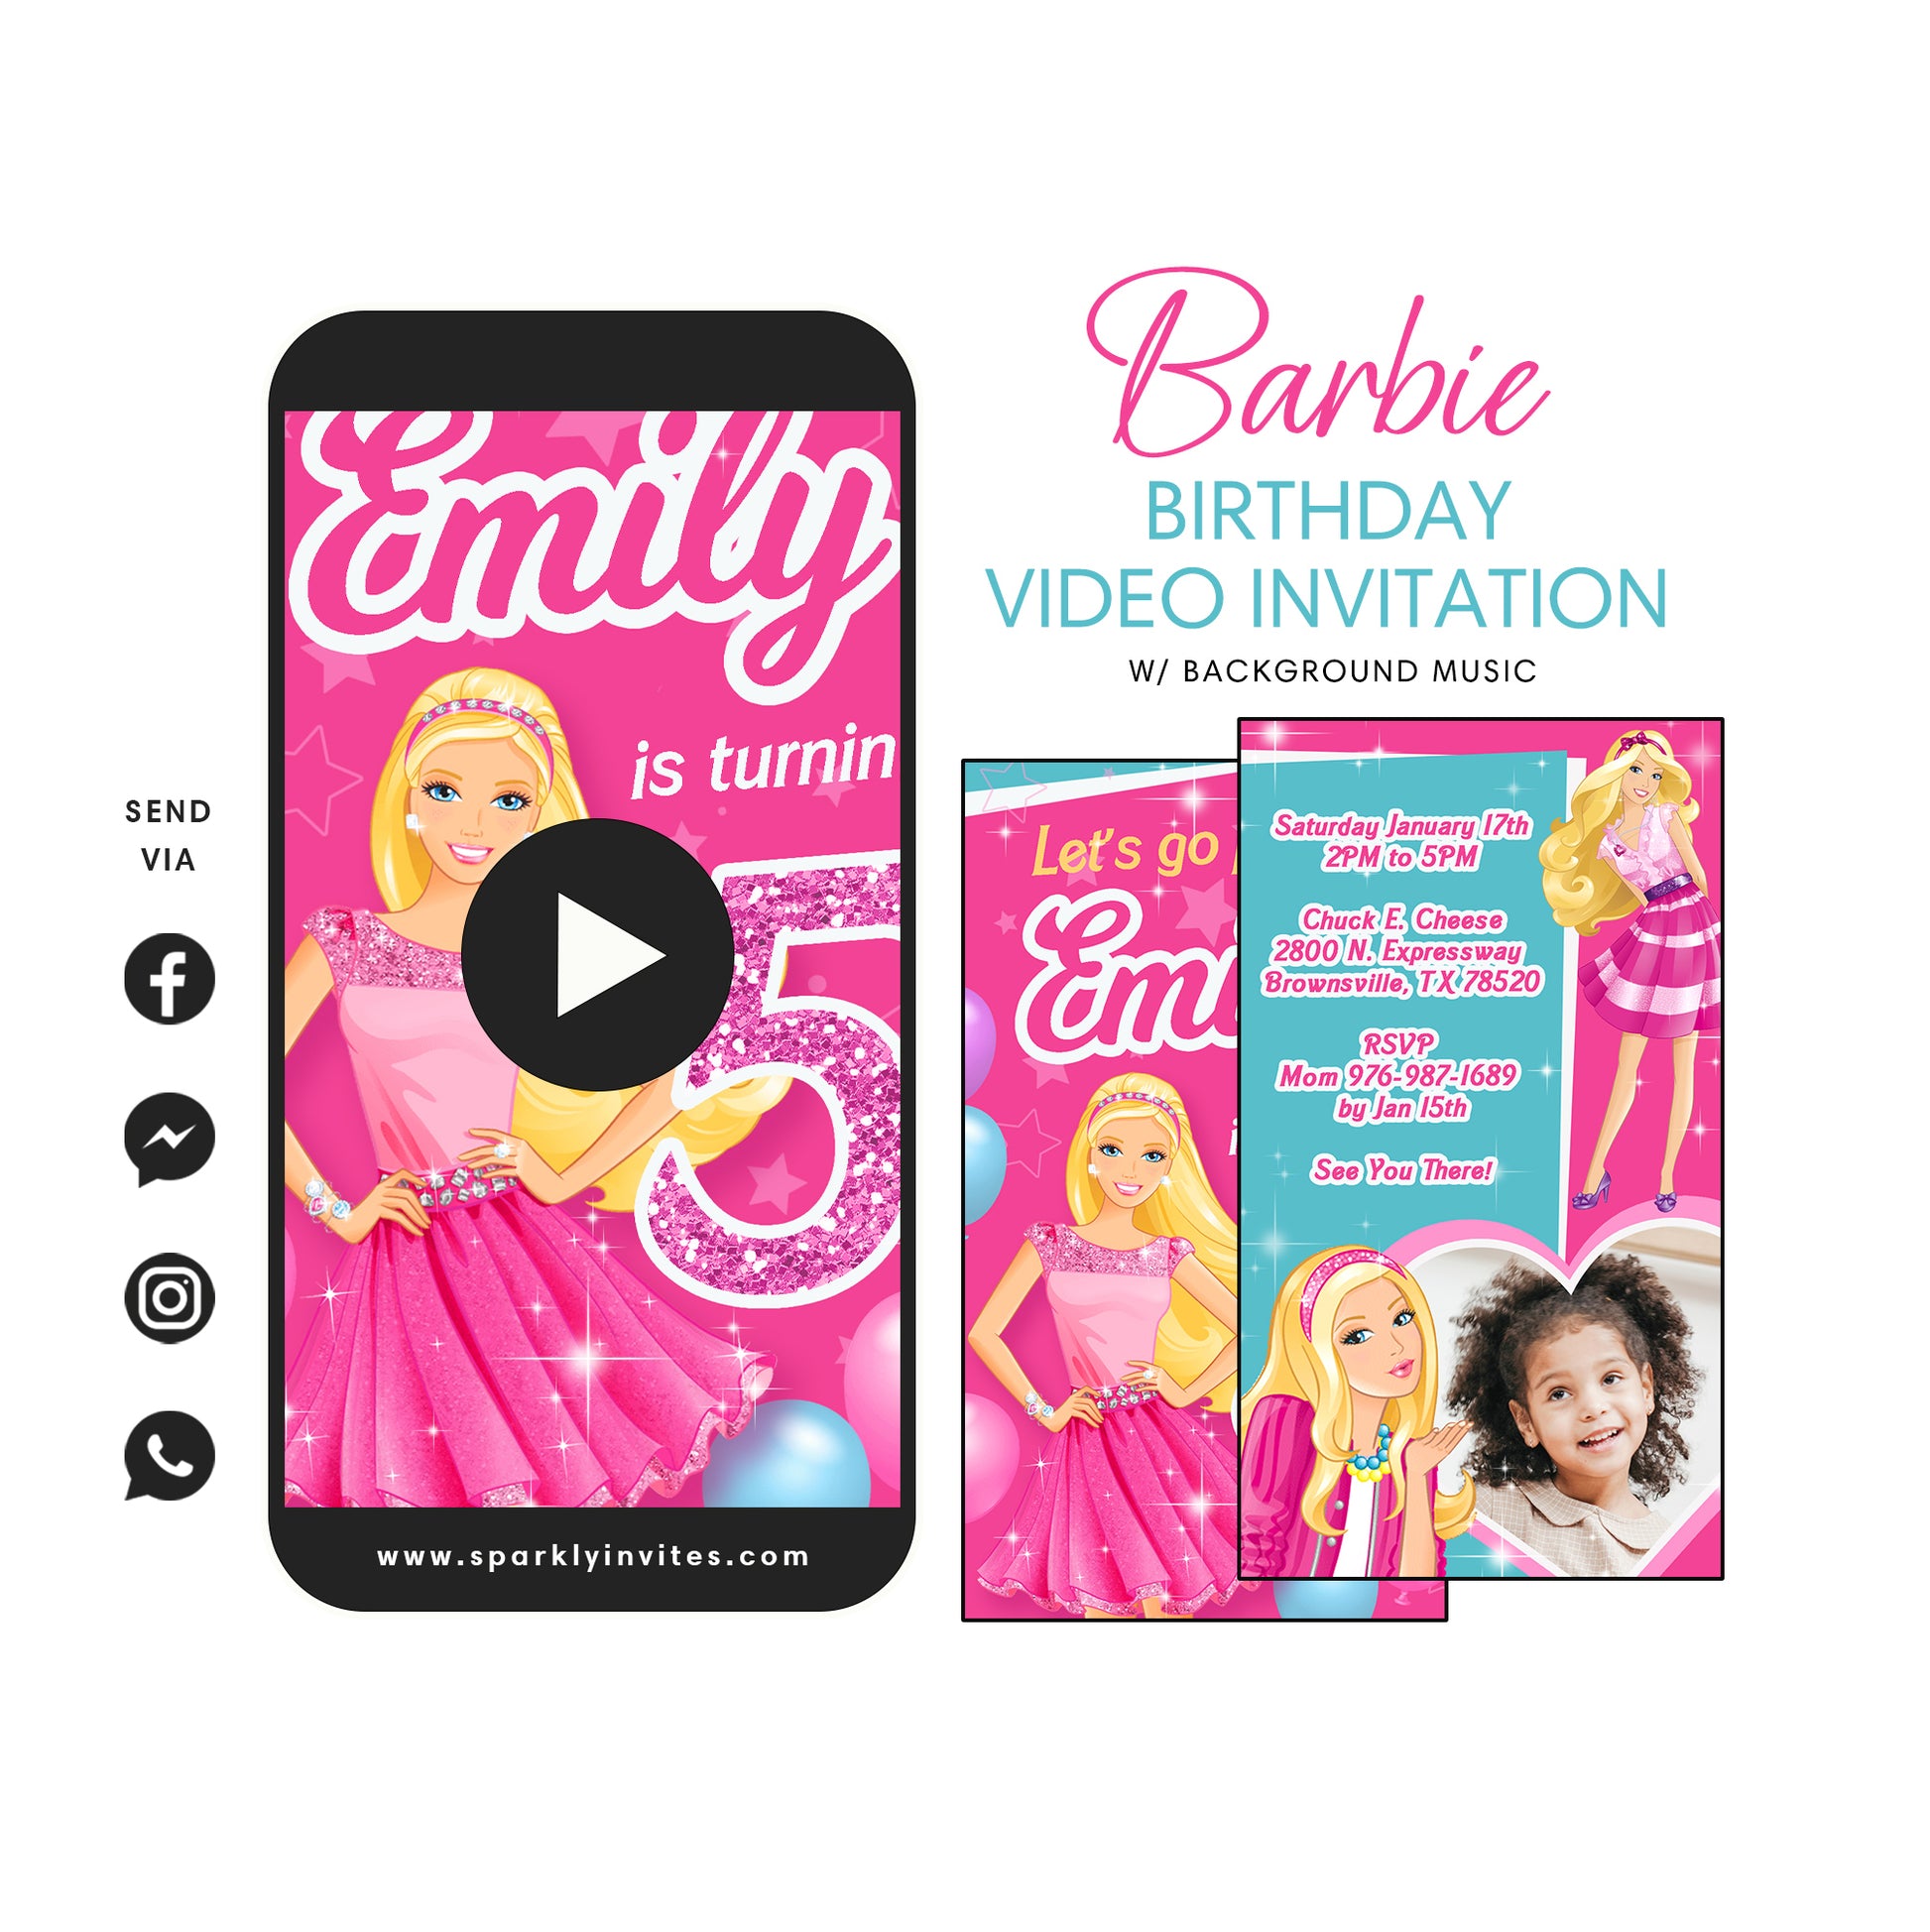 Barbie party video invitation